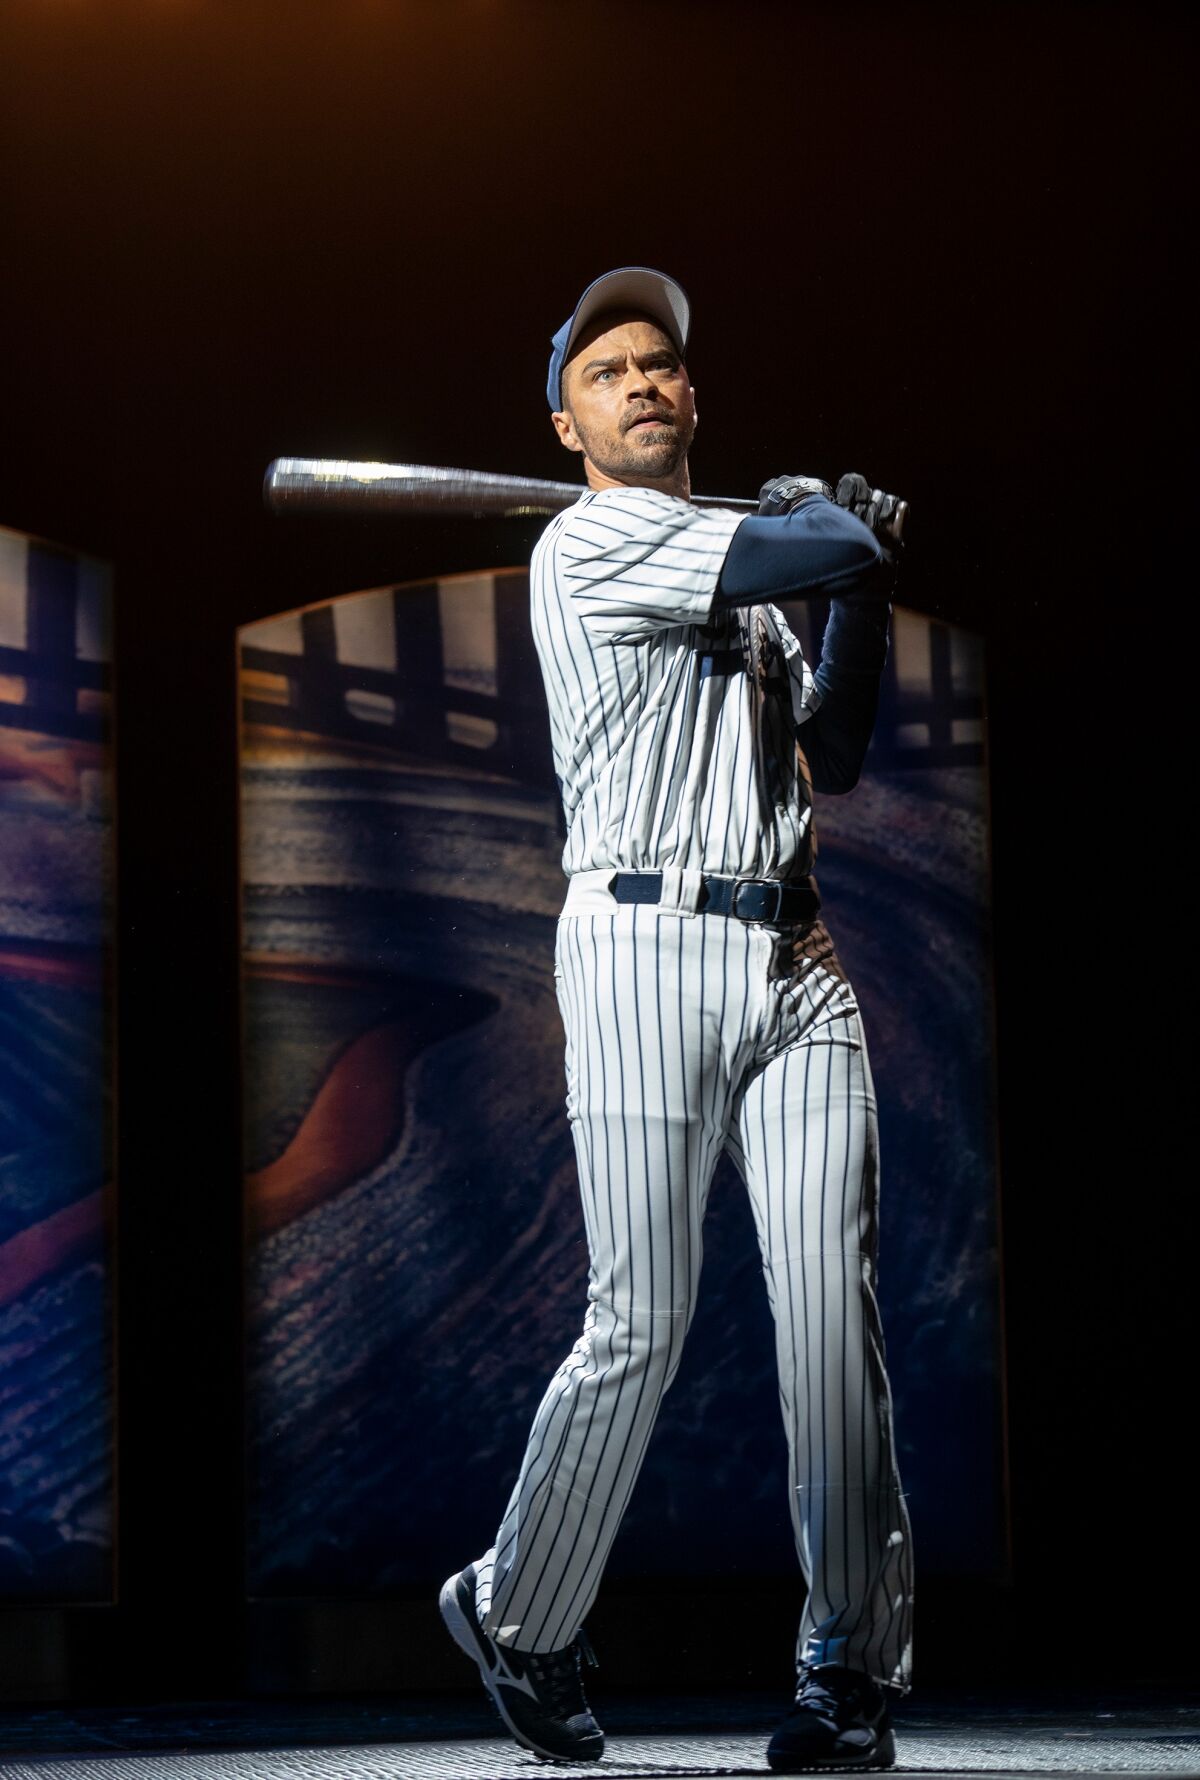 A man in a baseball uniform holds a bat aloft, ready to take a swing.